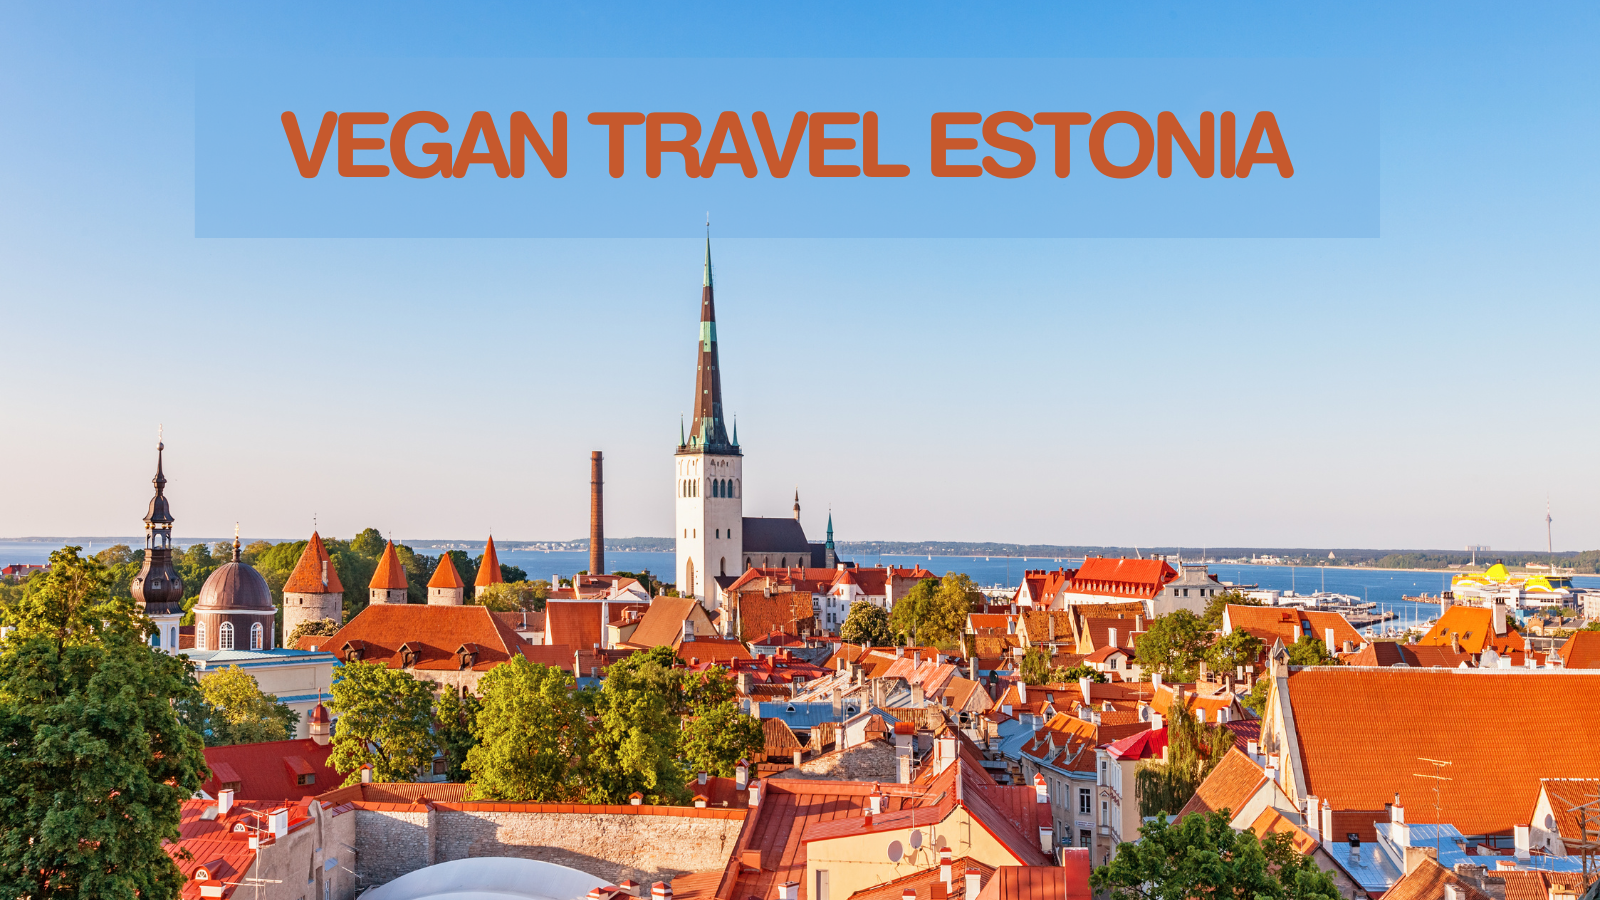 Vegan Travel Estonia